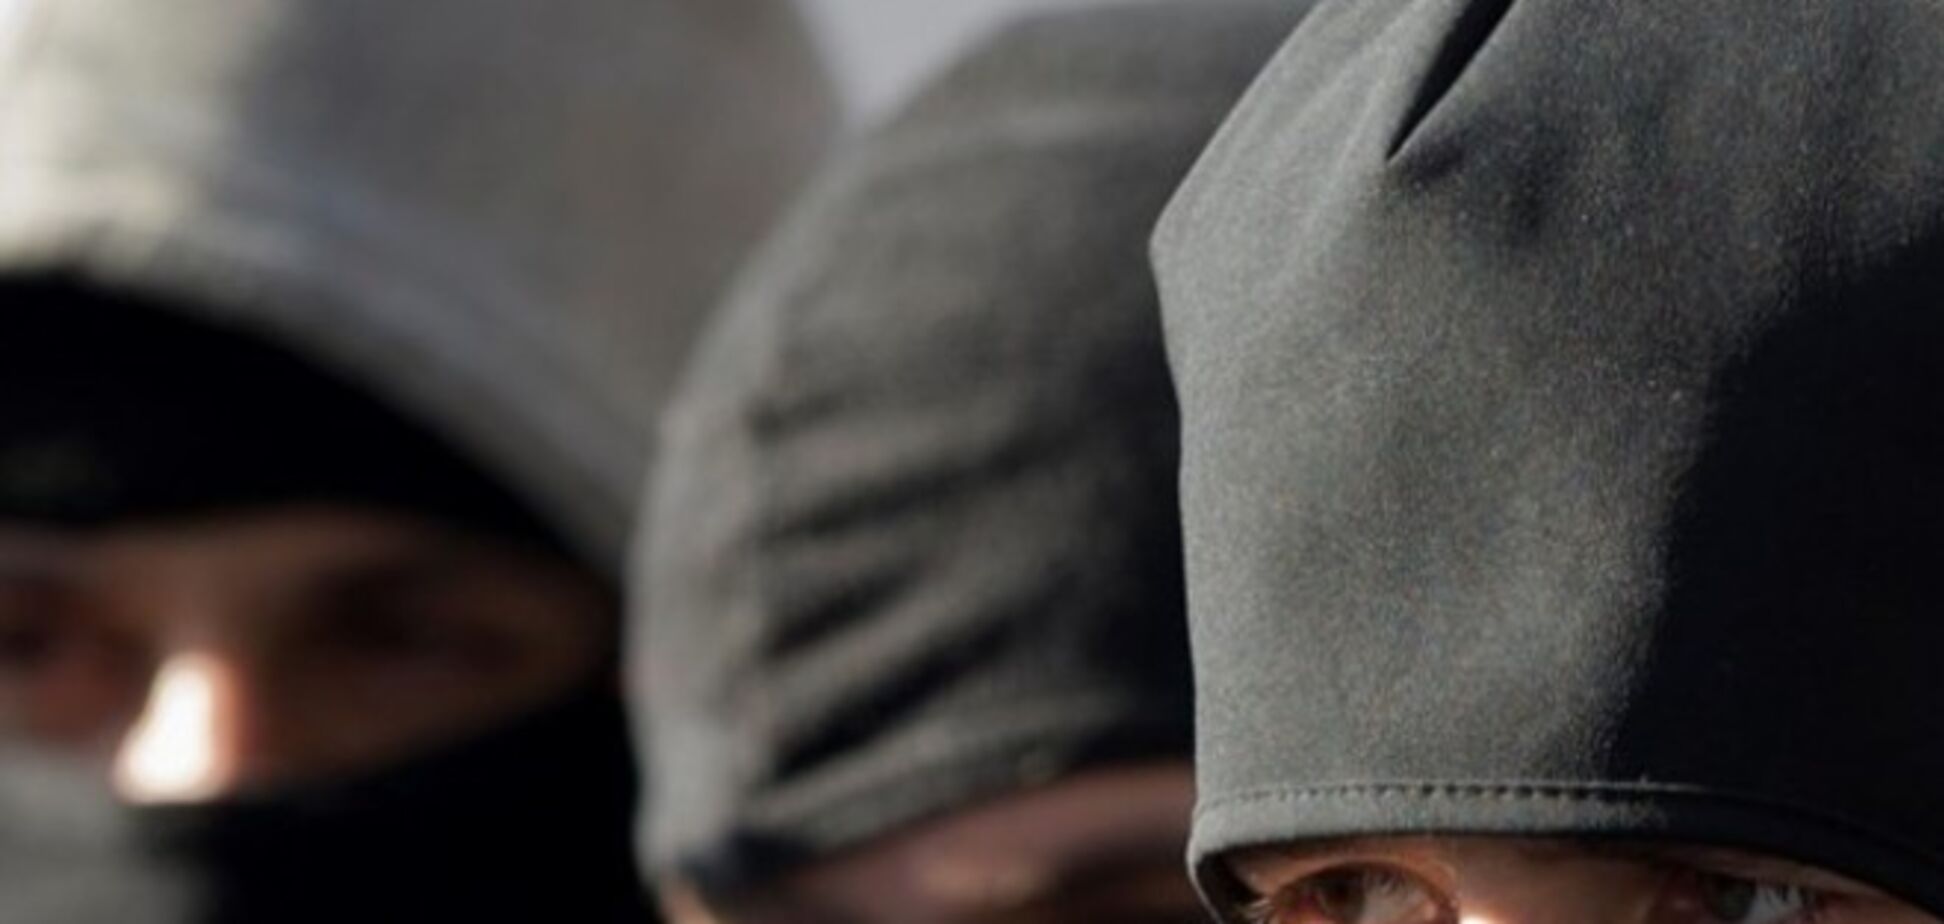 В Киеве люди в масках похитили мужчину, объявлен план 'Перехват' — СМИ